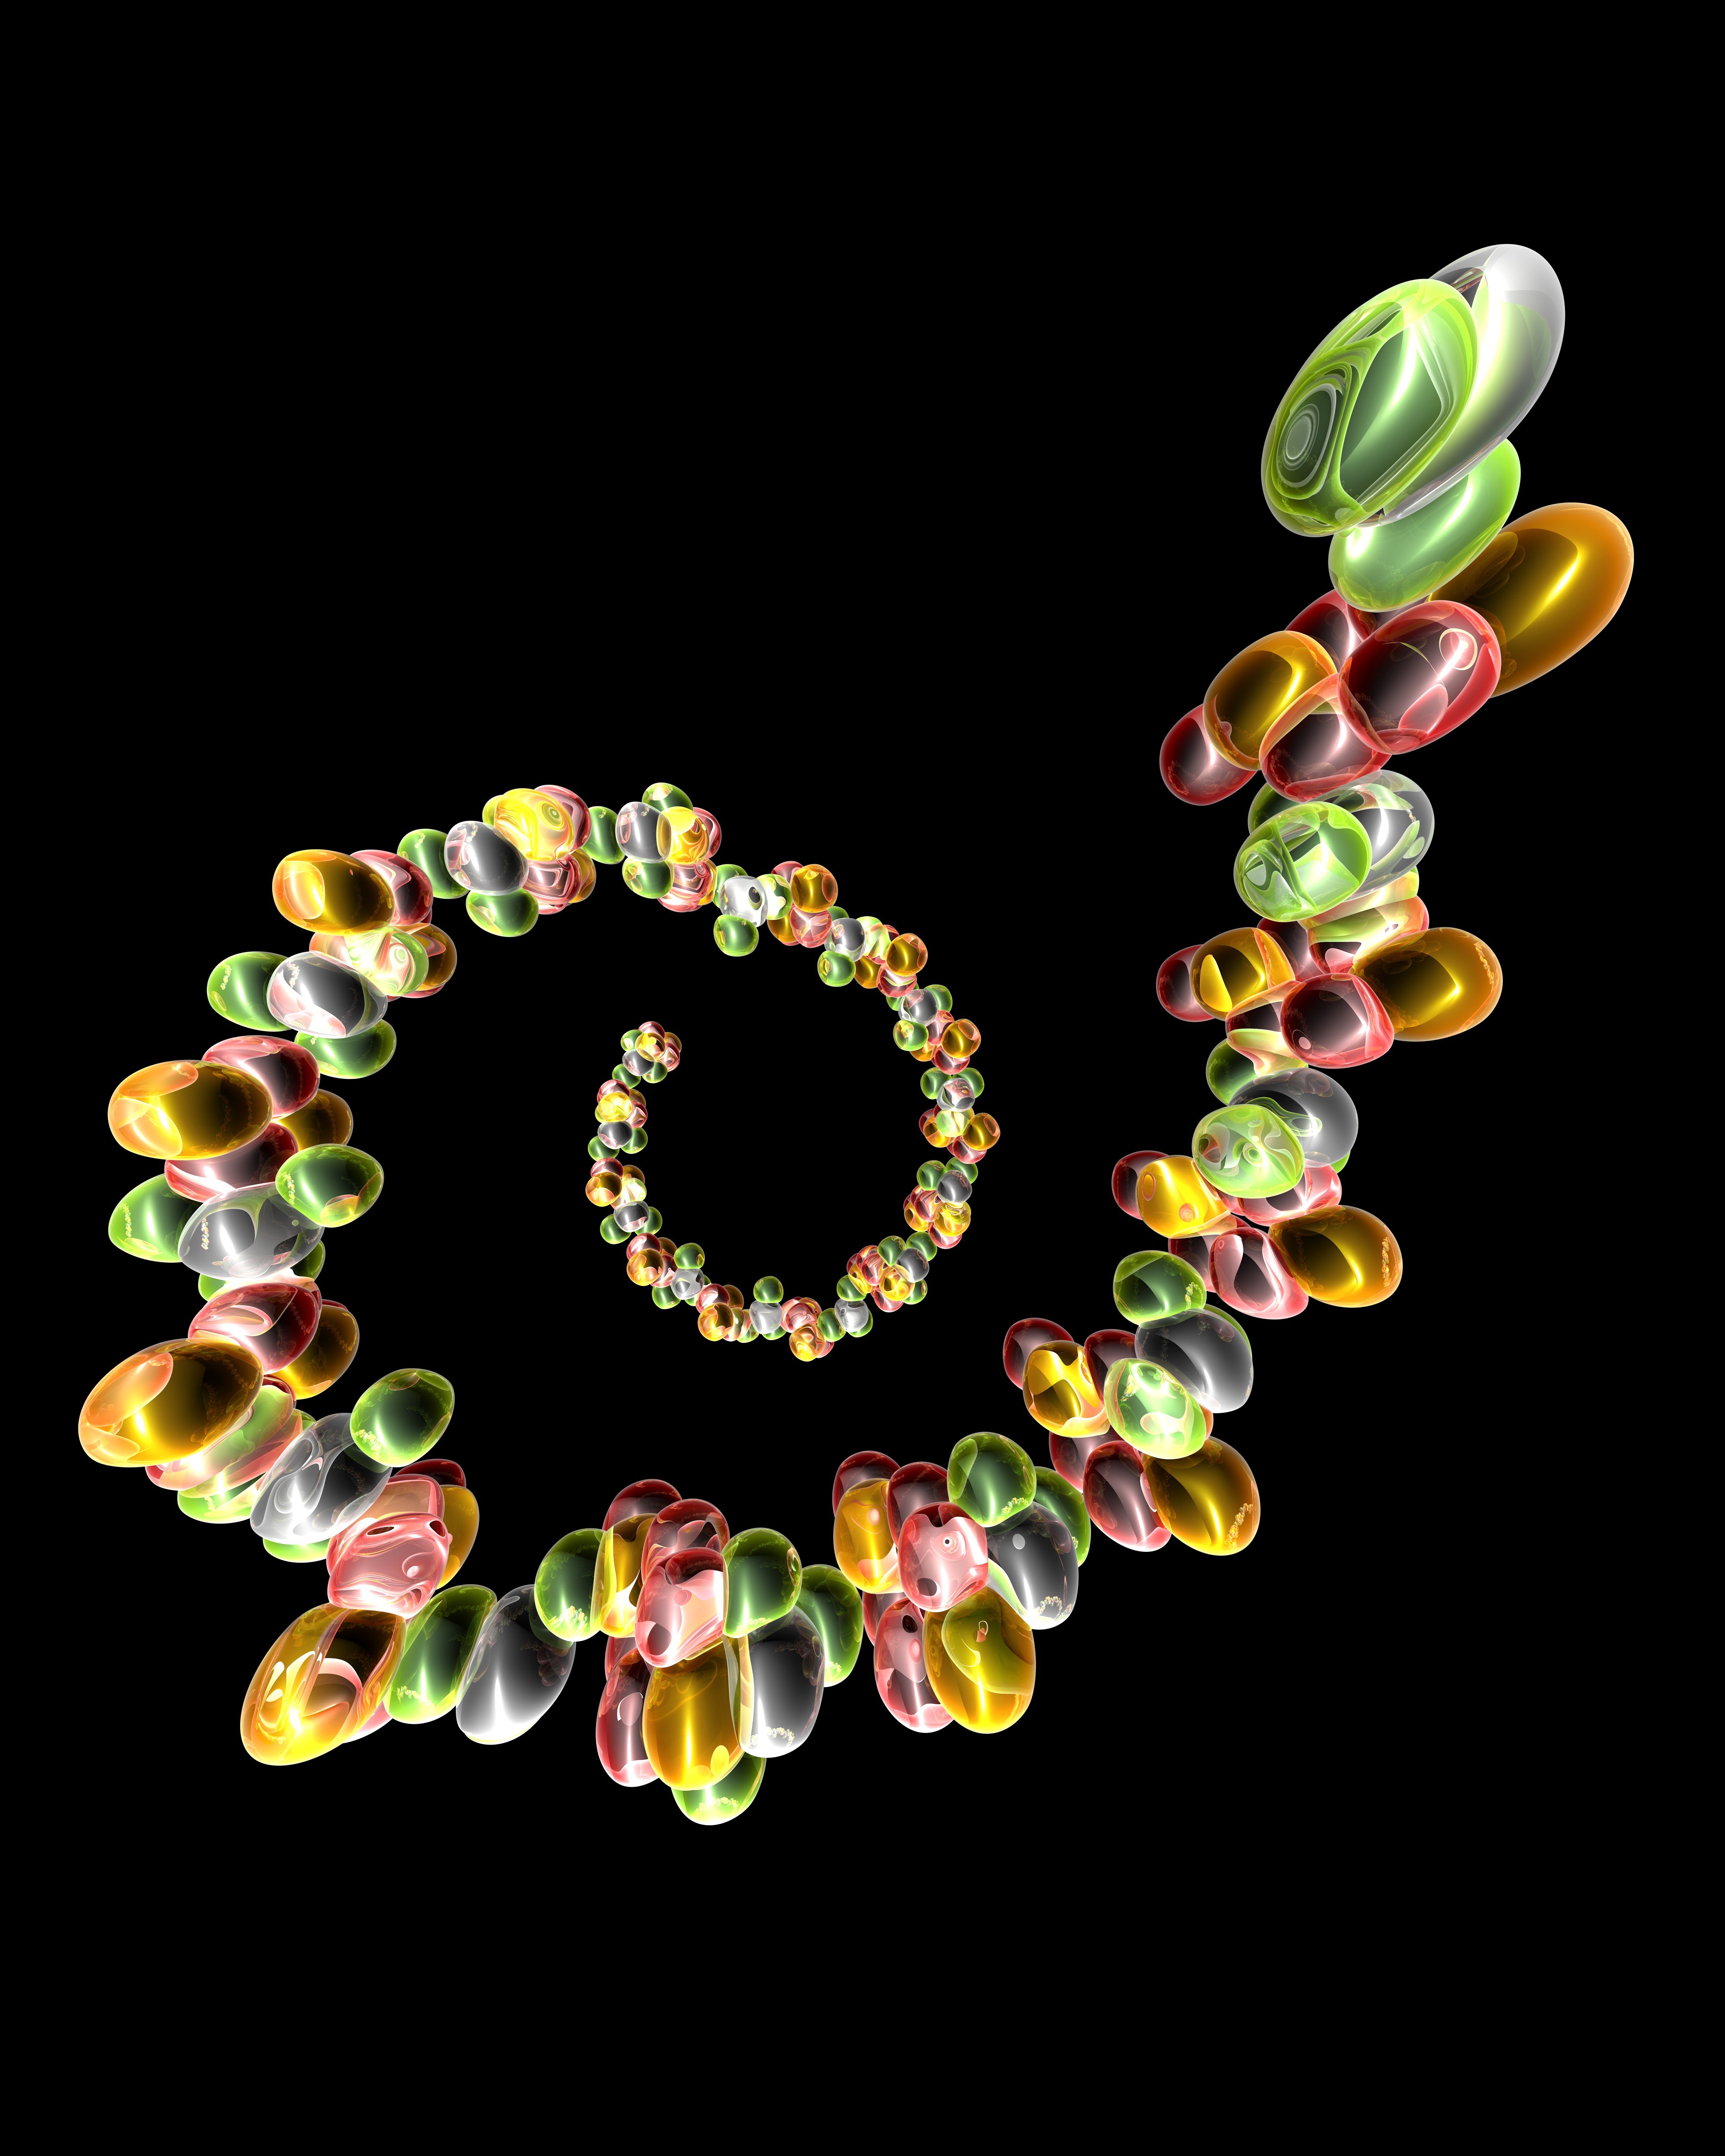 Conceptual artwork of ribonucleic acid. (Getty Images)